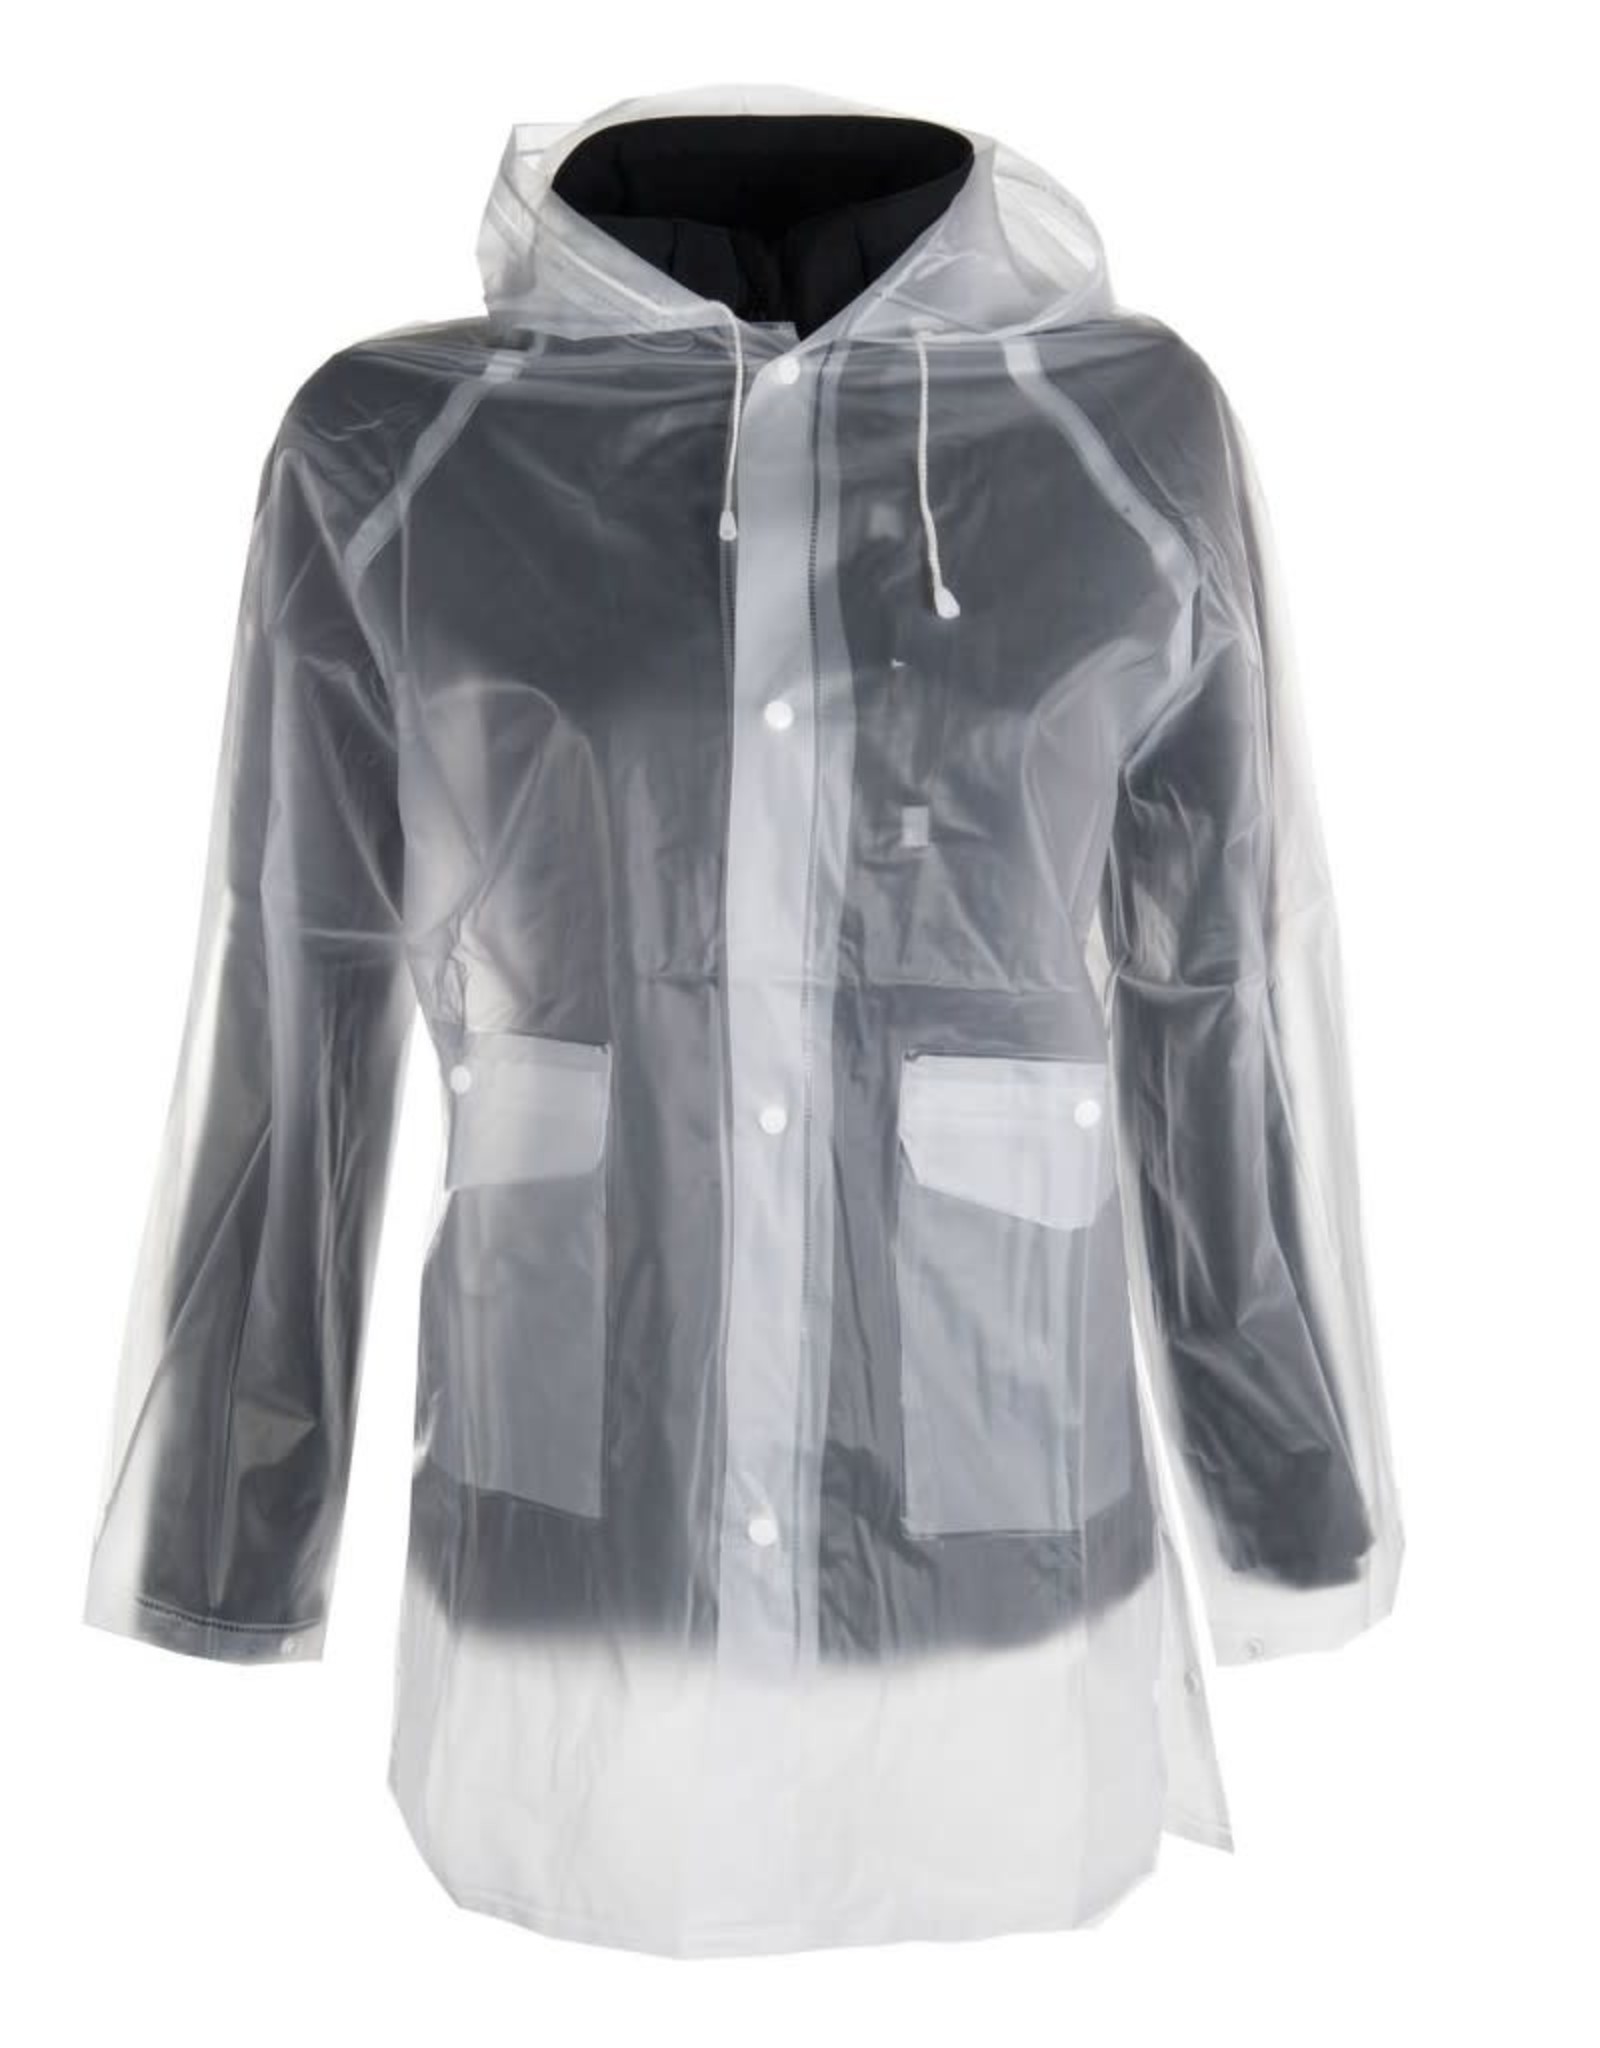 HKM Rain jacket, transparent for Shows